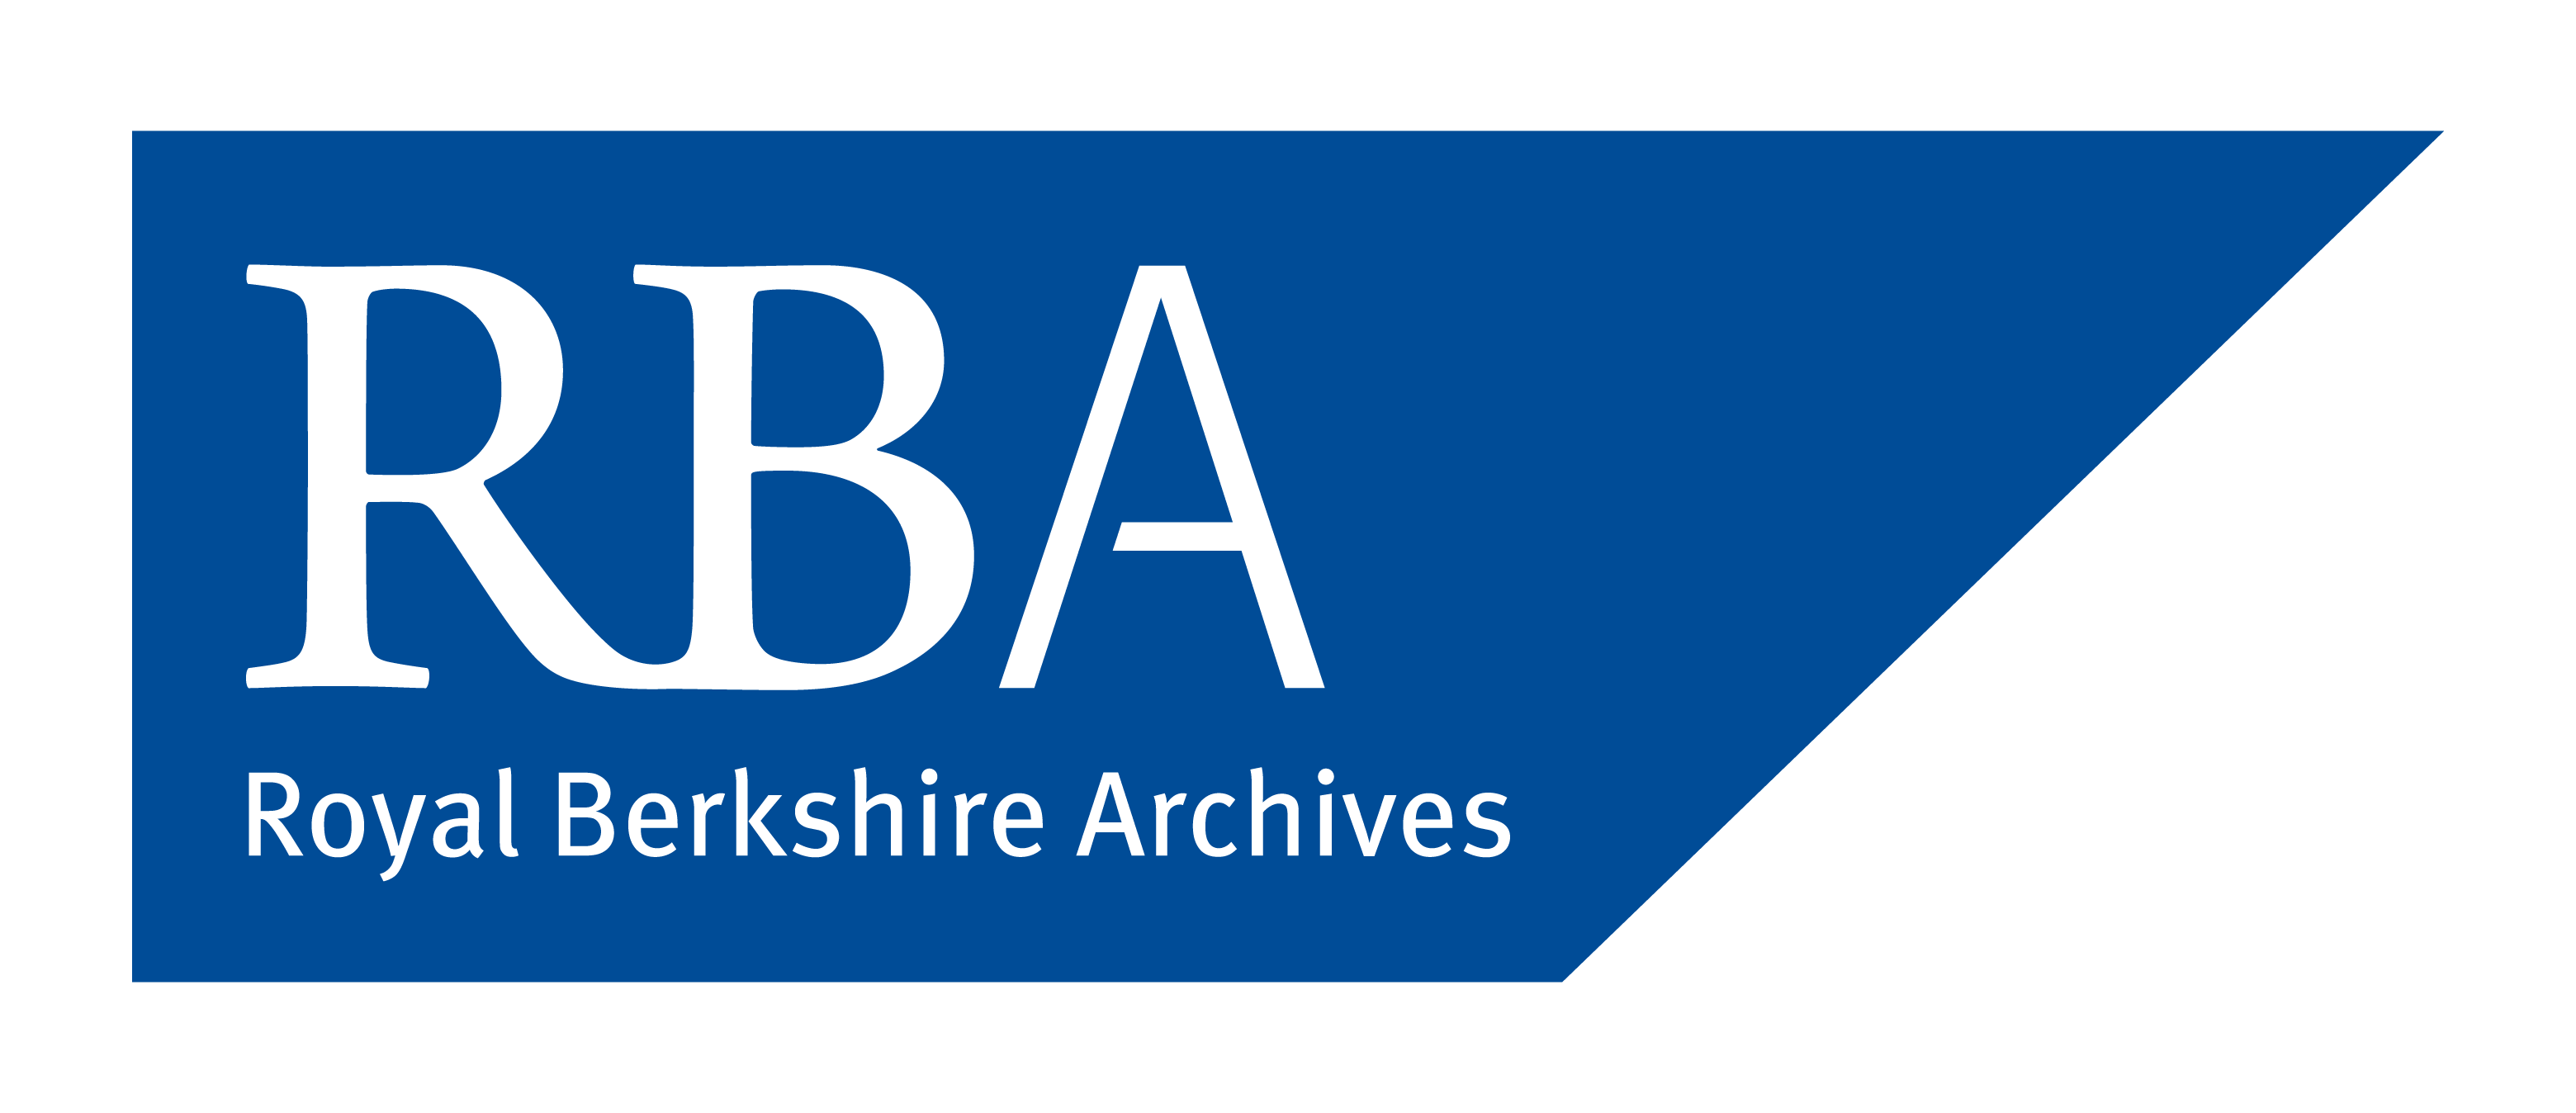 Royal Berkshire Archives Digital Repository